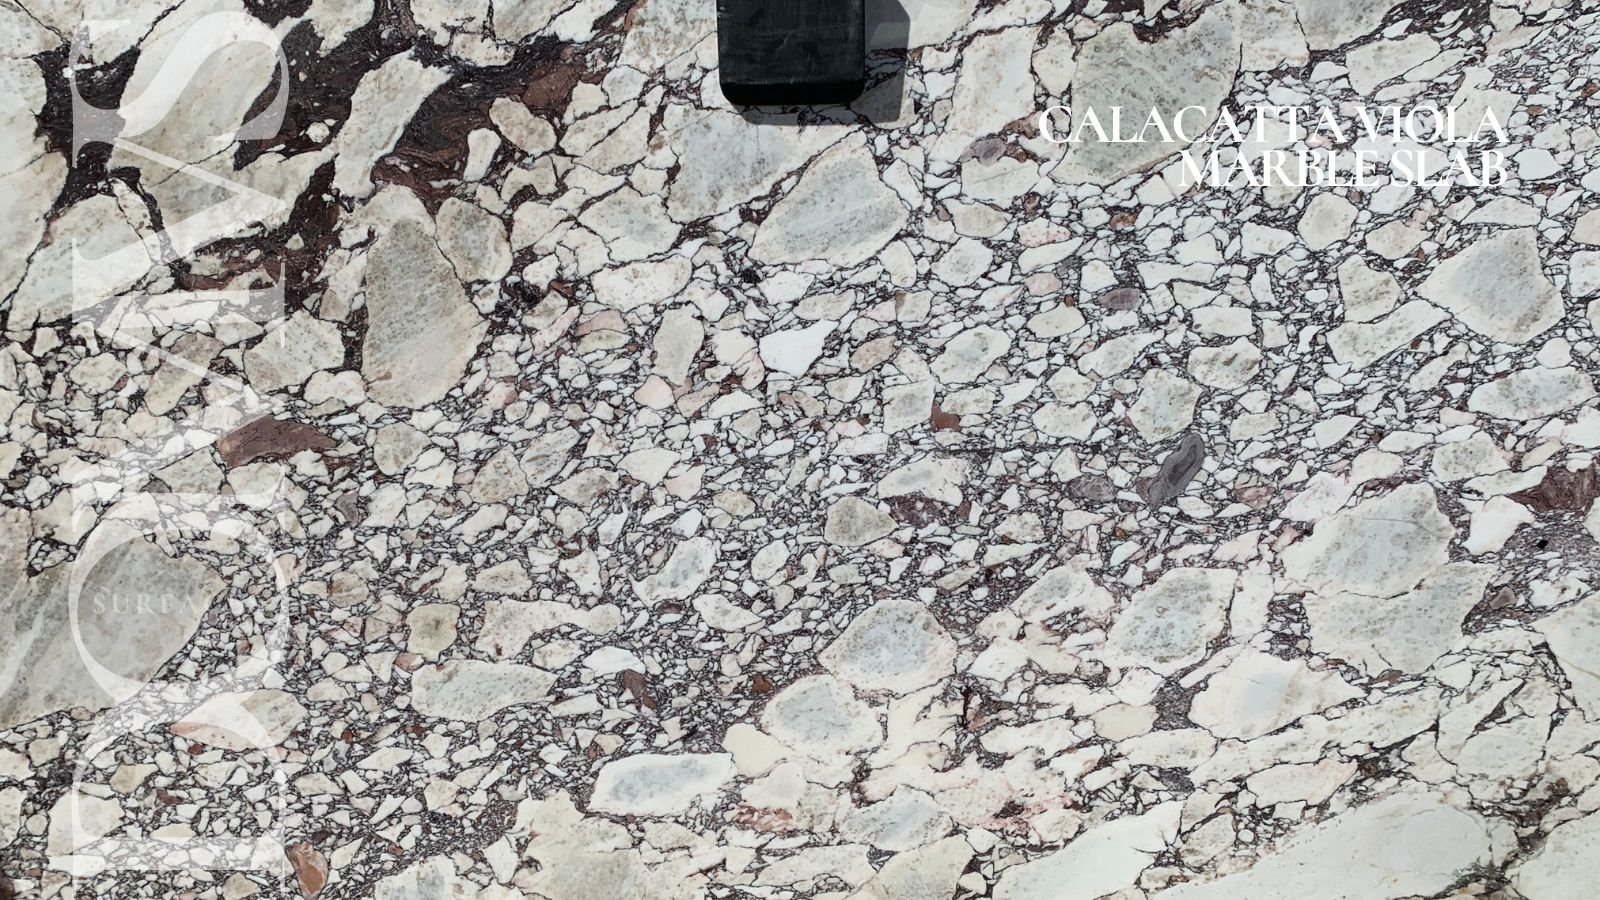 Calacatta Viola Marble Slab 113 x 69 2CMBV DOMVS SURFACES.jpg